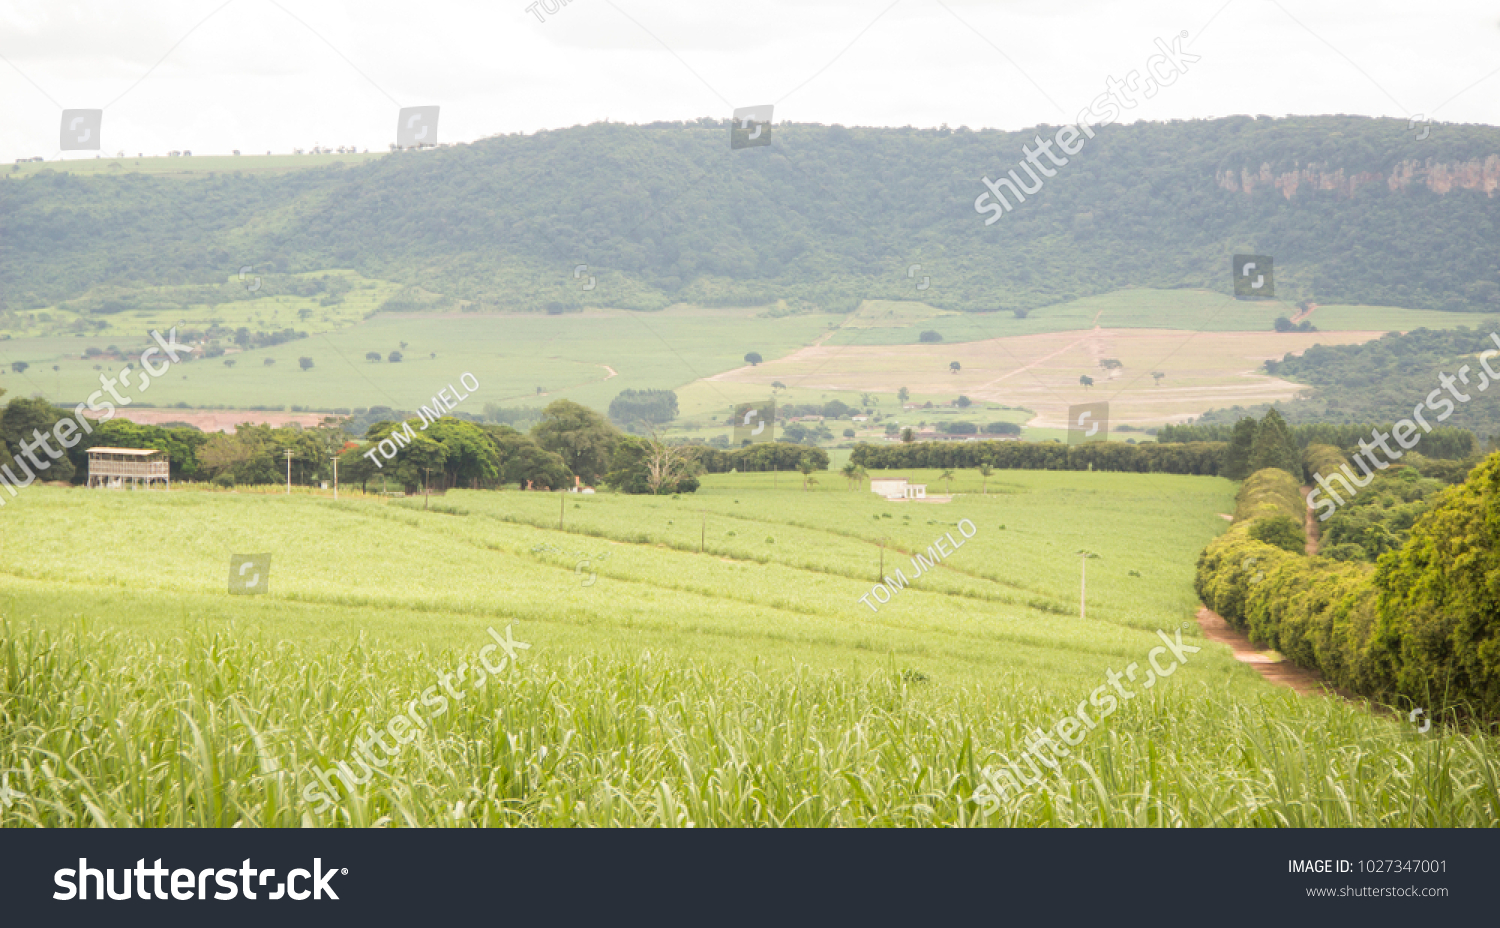 Cane plantation in Brazil in Mountain area #1027347001